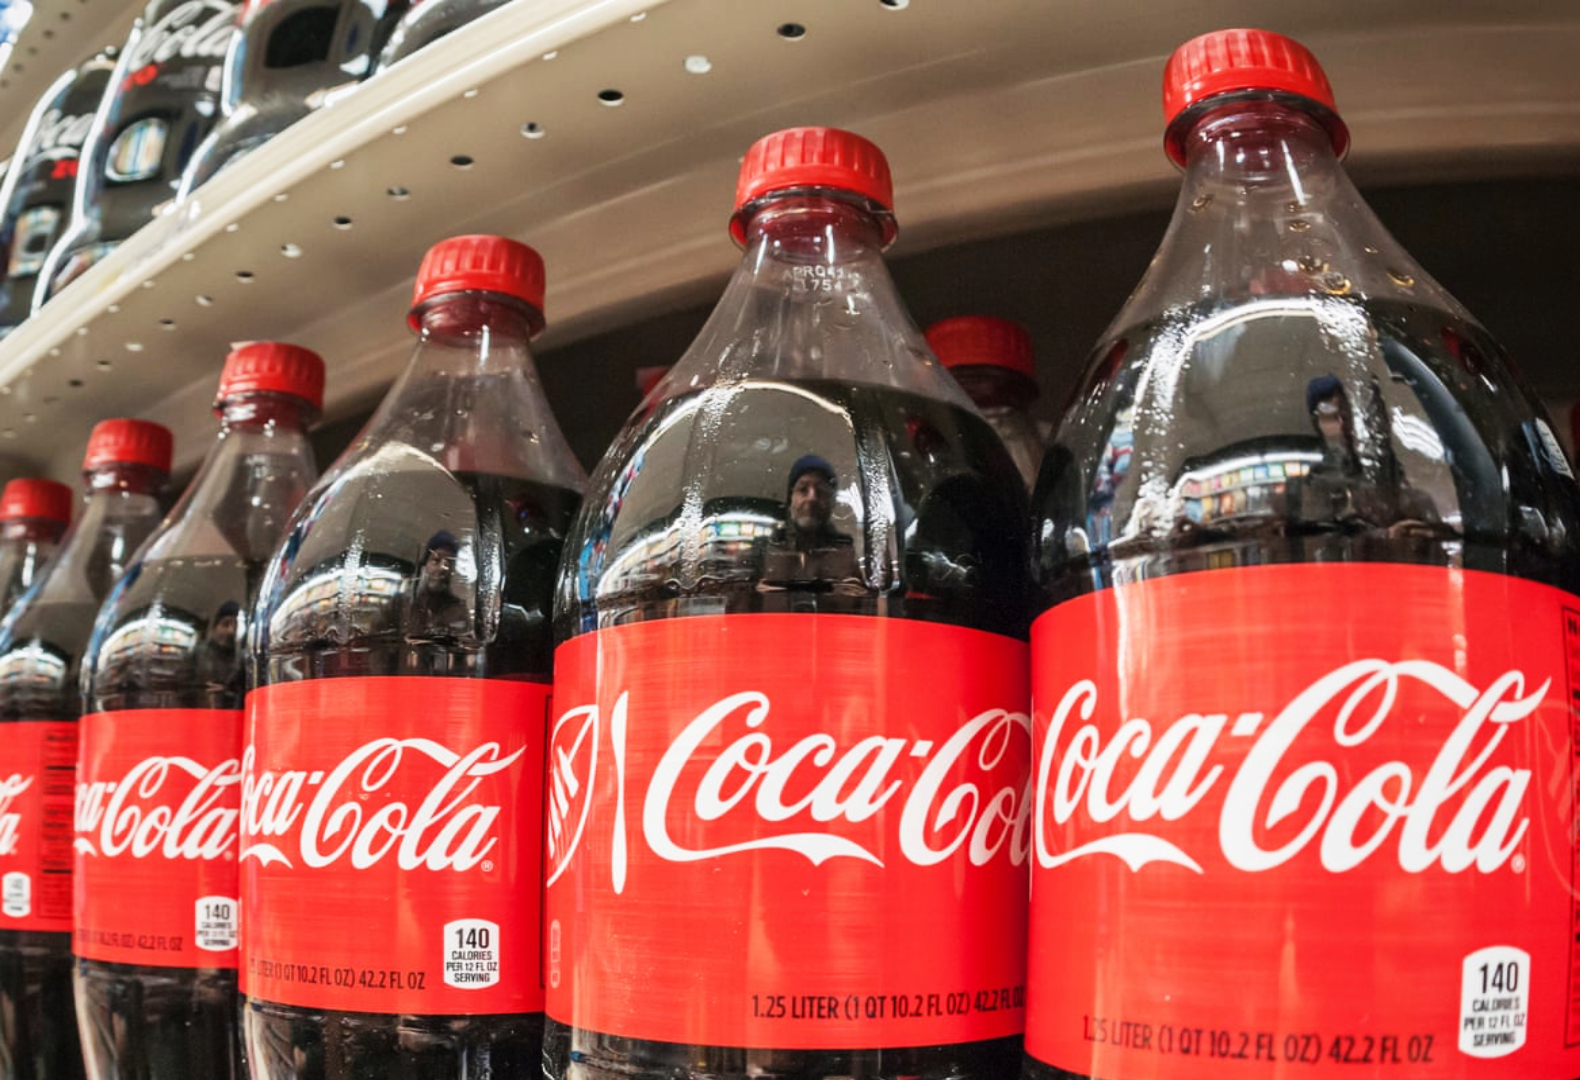 Layoff Coca Cola To Cut 2200 Jobs Worldwide Amid Covid-19